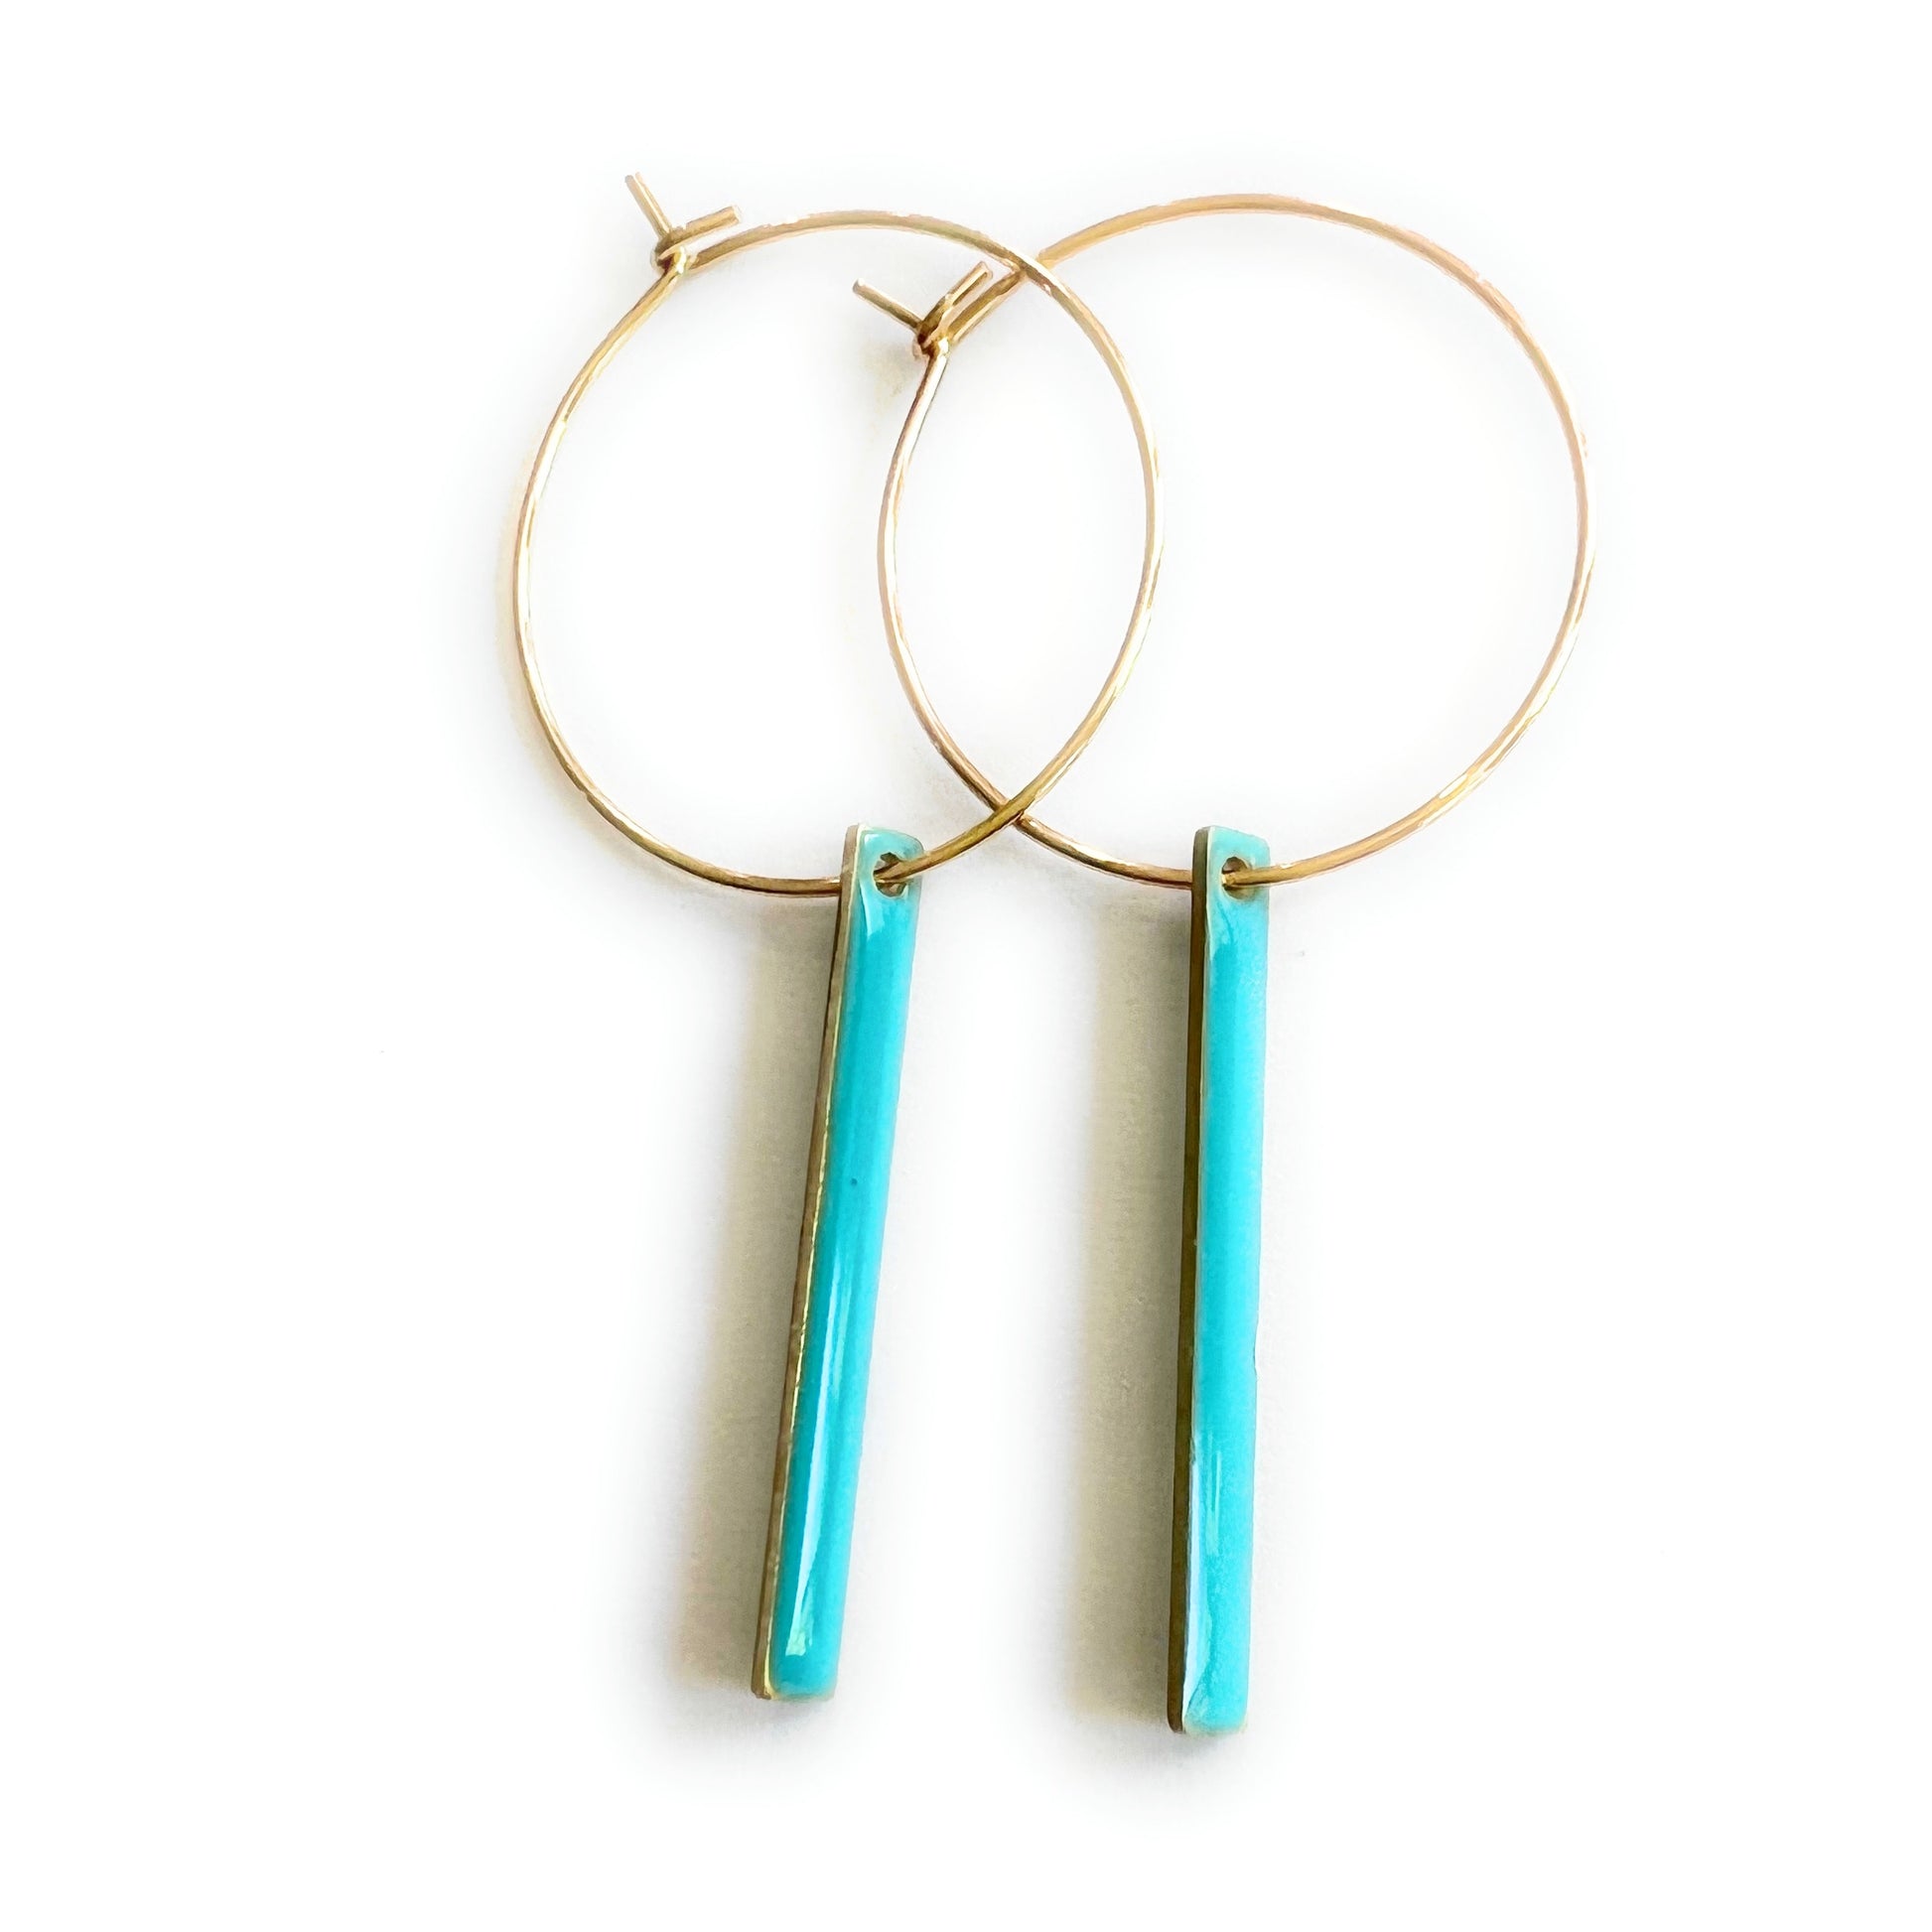 Gold hoops with aqua bar charm lightweight statement earrings